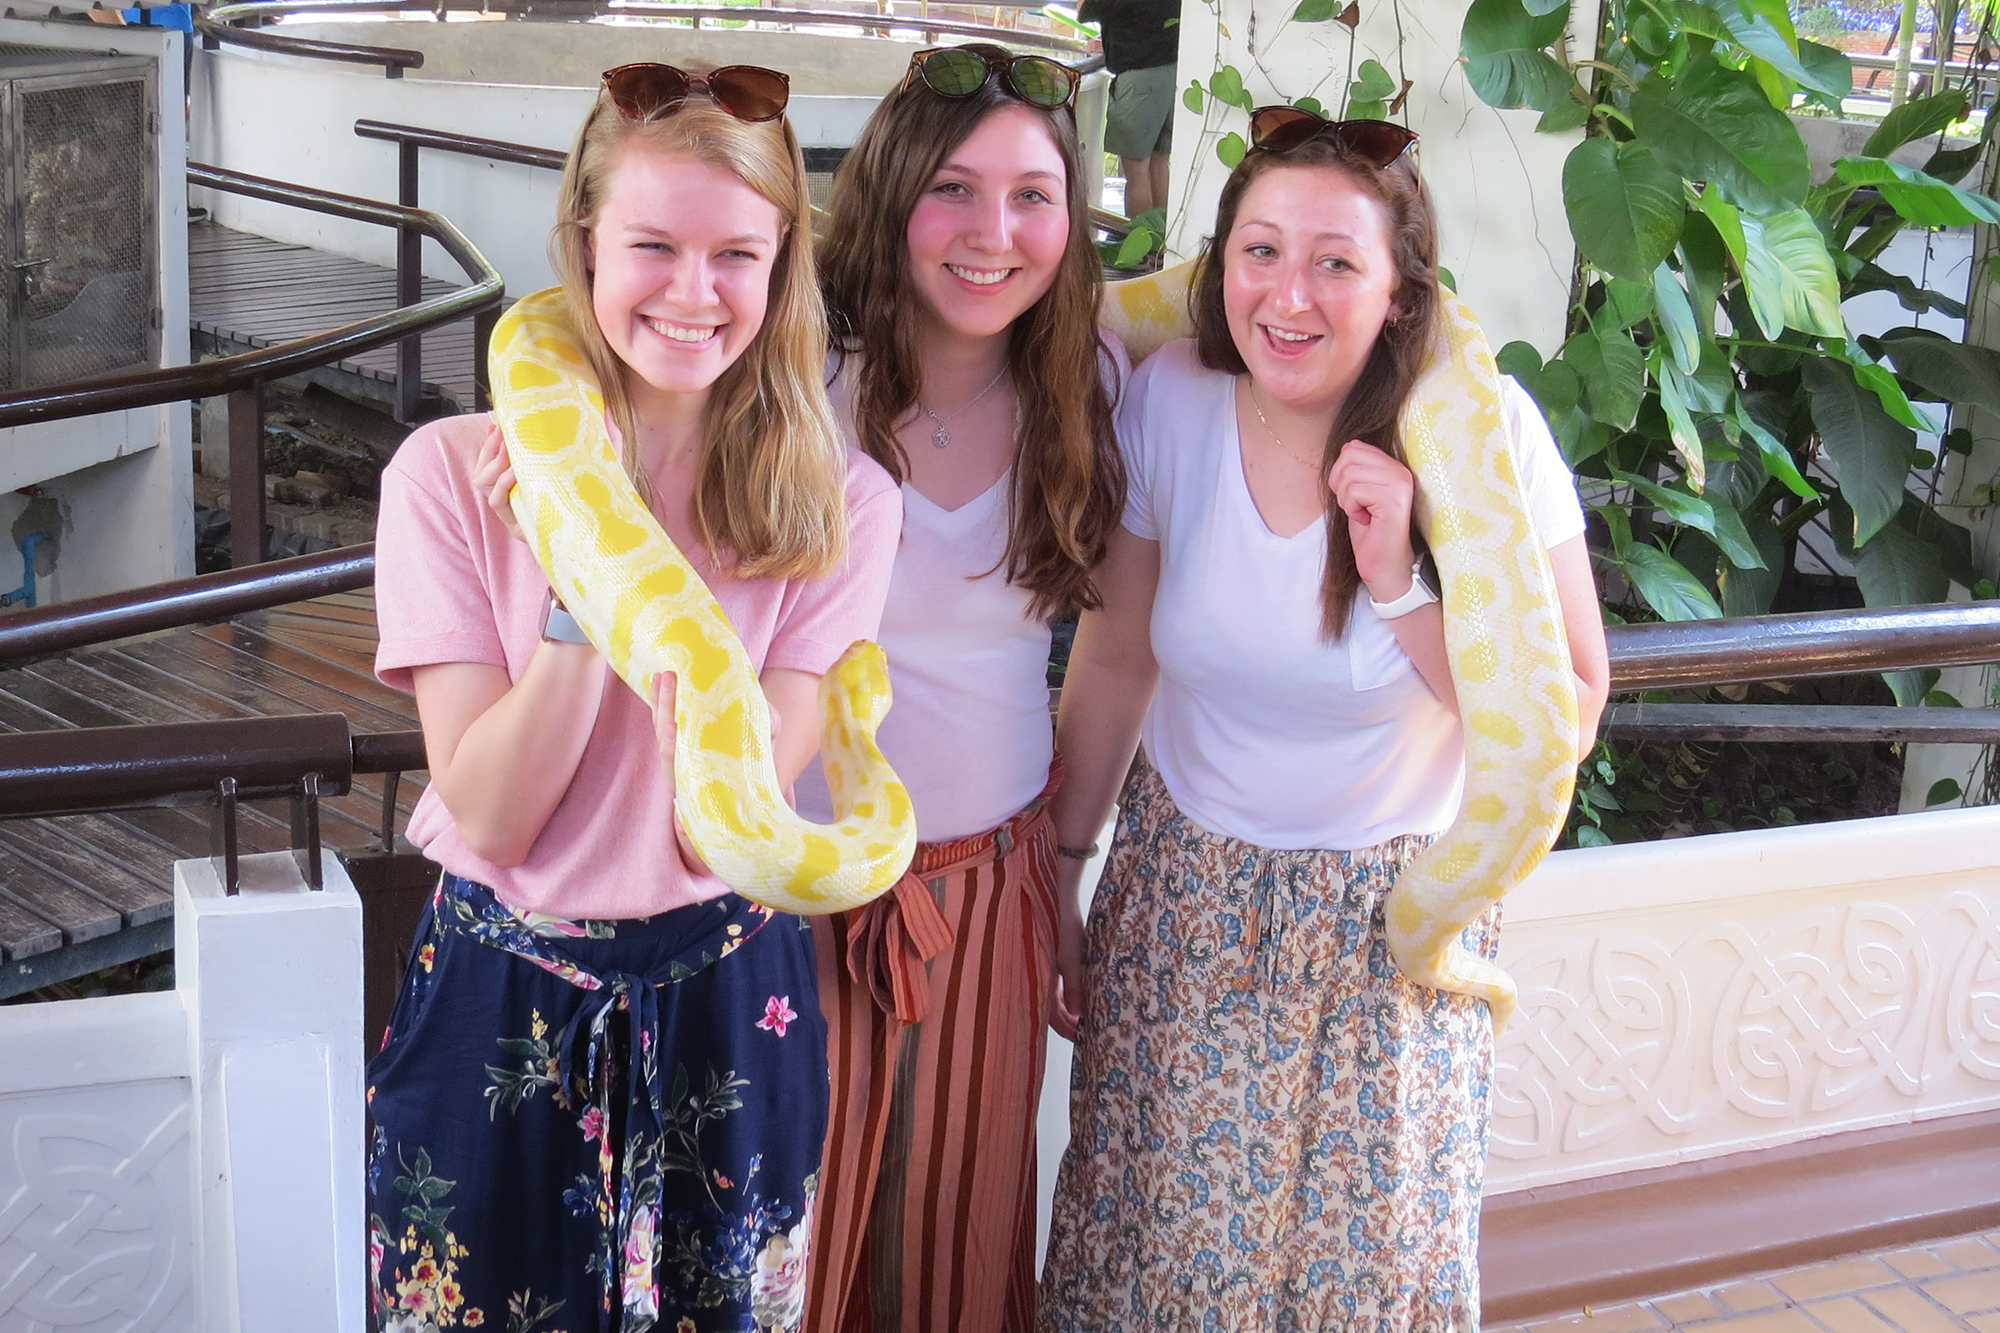 Elizabeth Fahrmeier and friends with a giant snake